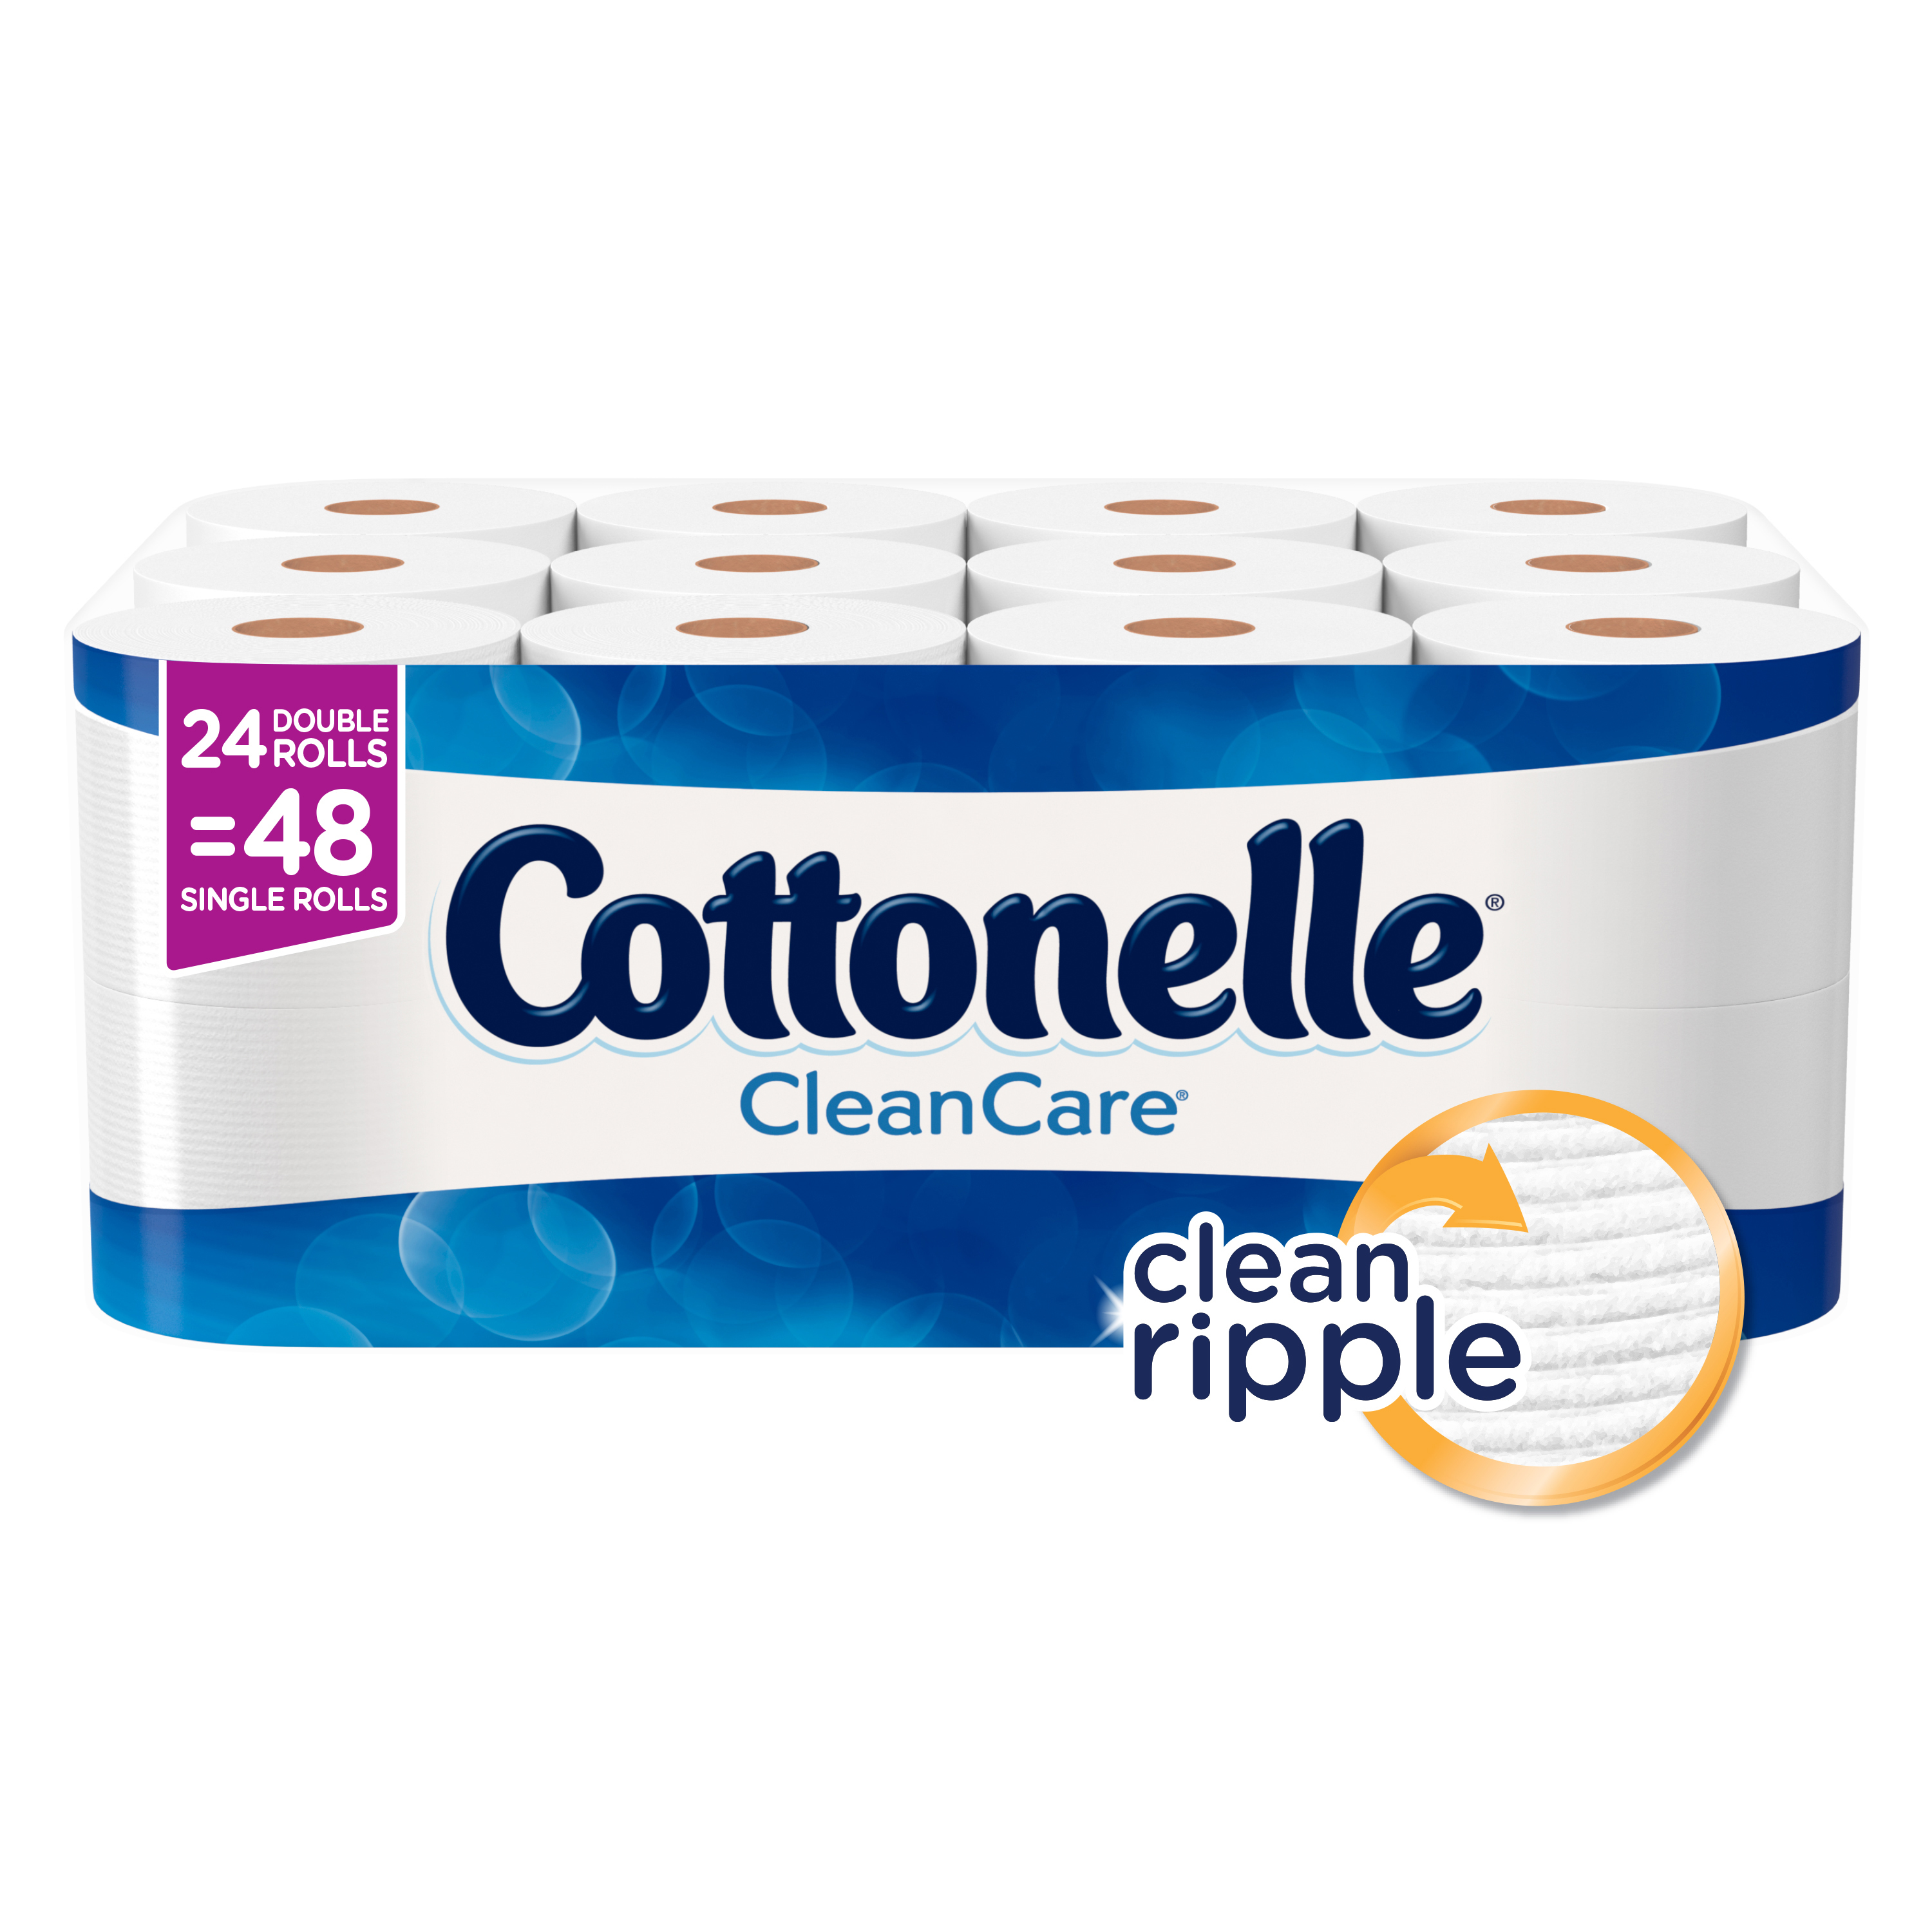 Cottonelle Clean Care Toilet Paper, 24 Double Rolls - image 1 of 5